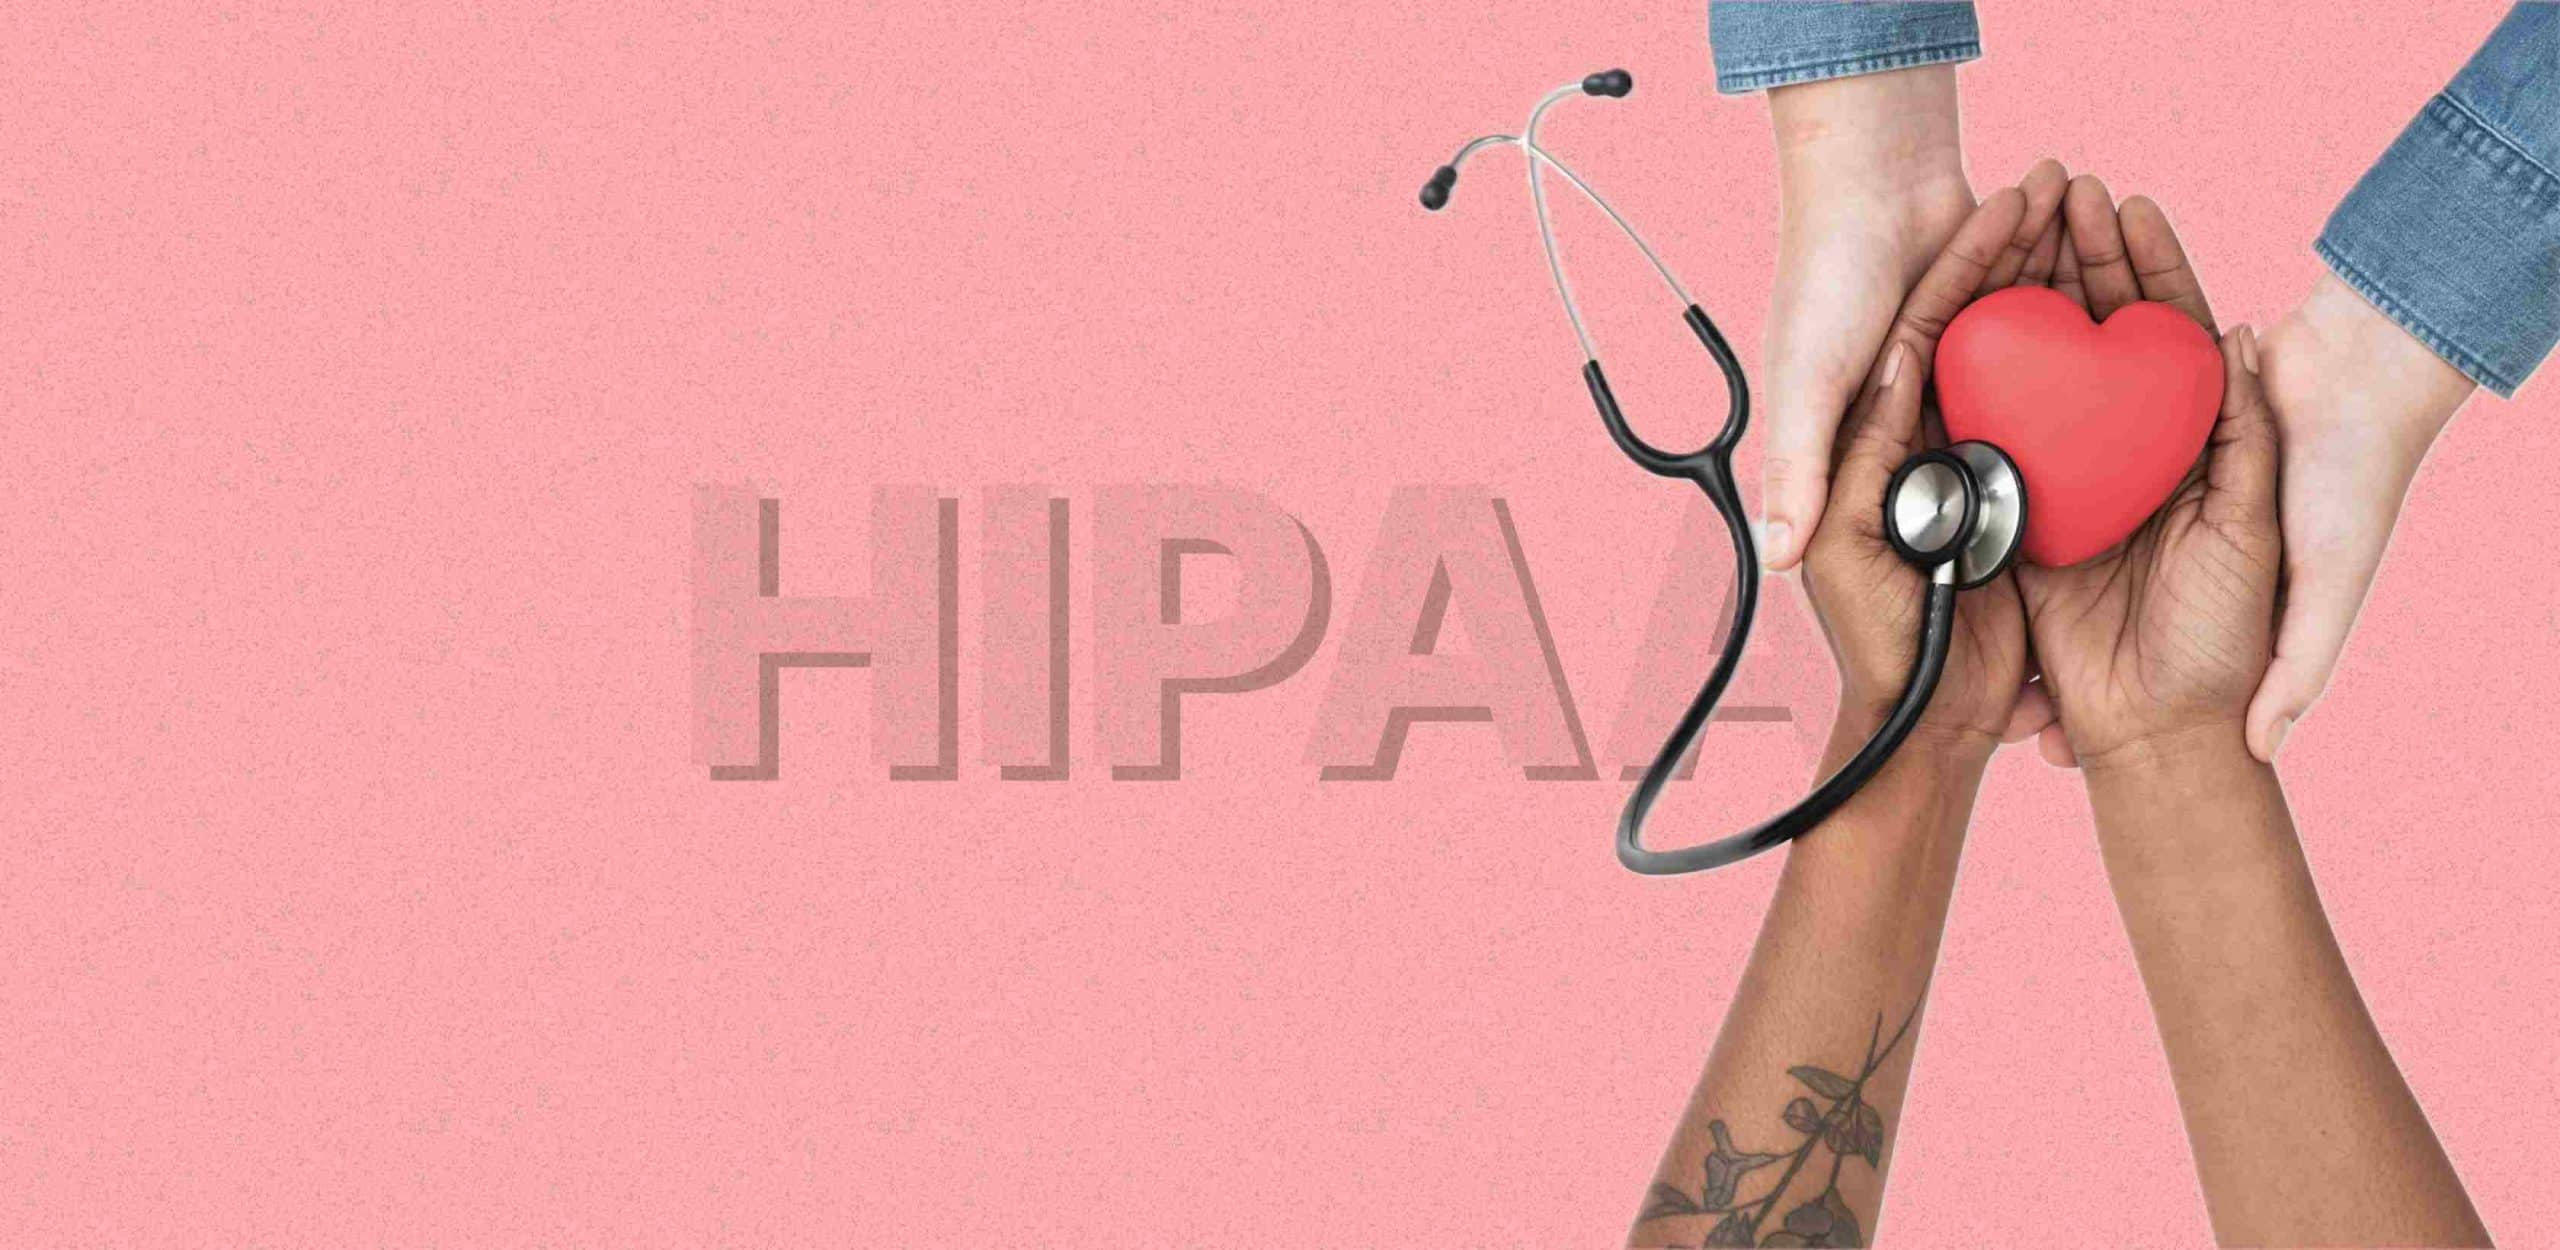 HIPAA-compliant Healthcare Software